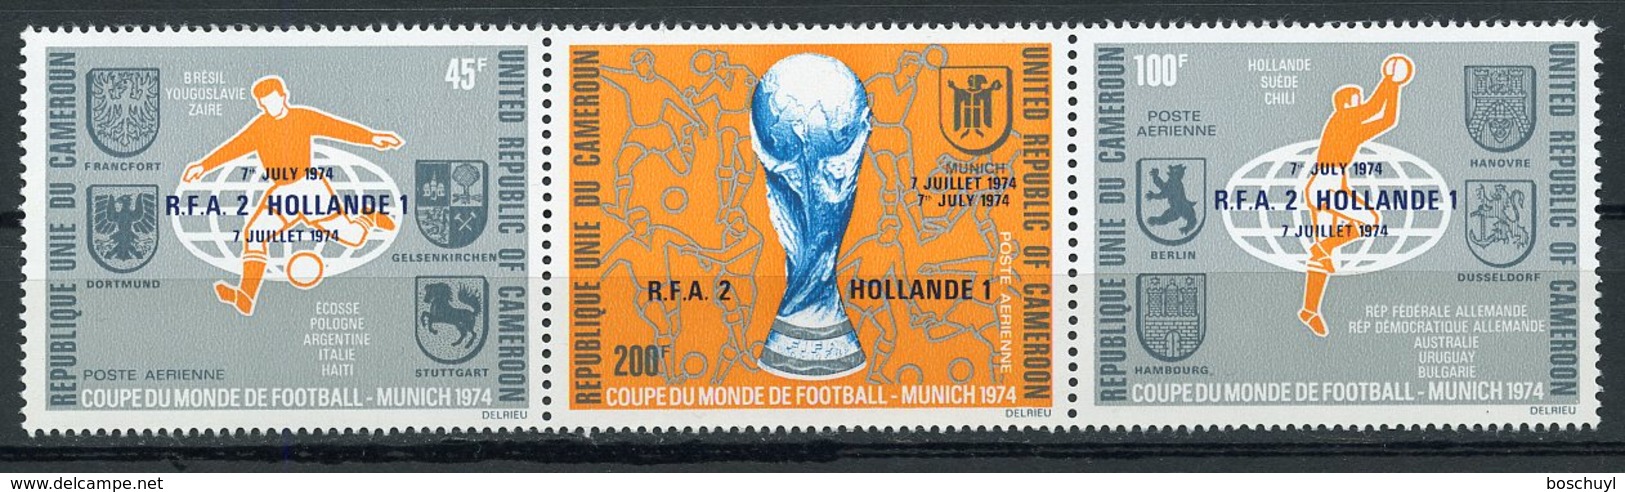 Cameroun, 1974, Soccer World Cup Germany, Football, MNH Overprinted Strip, Michel 777-779 - Camerun (1960-...)